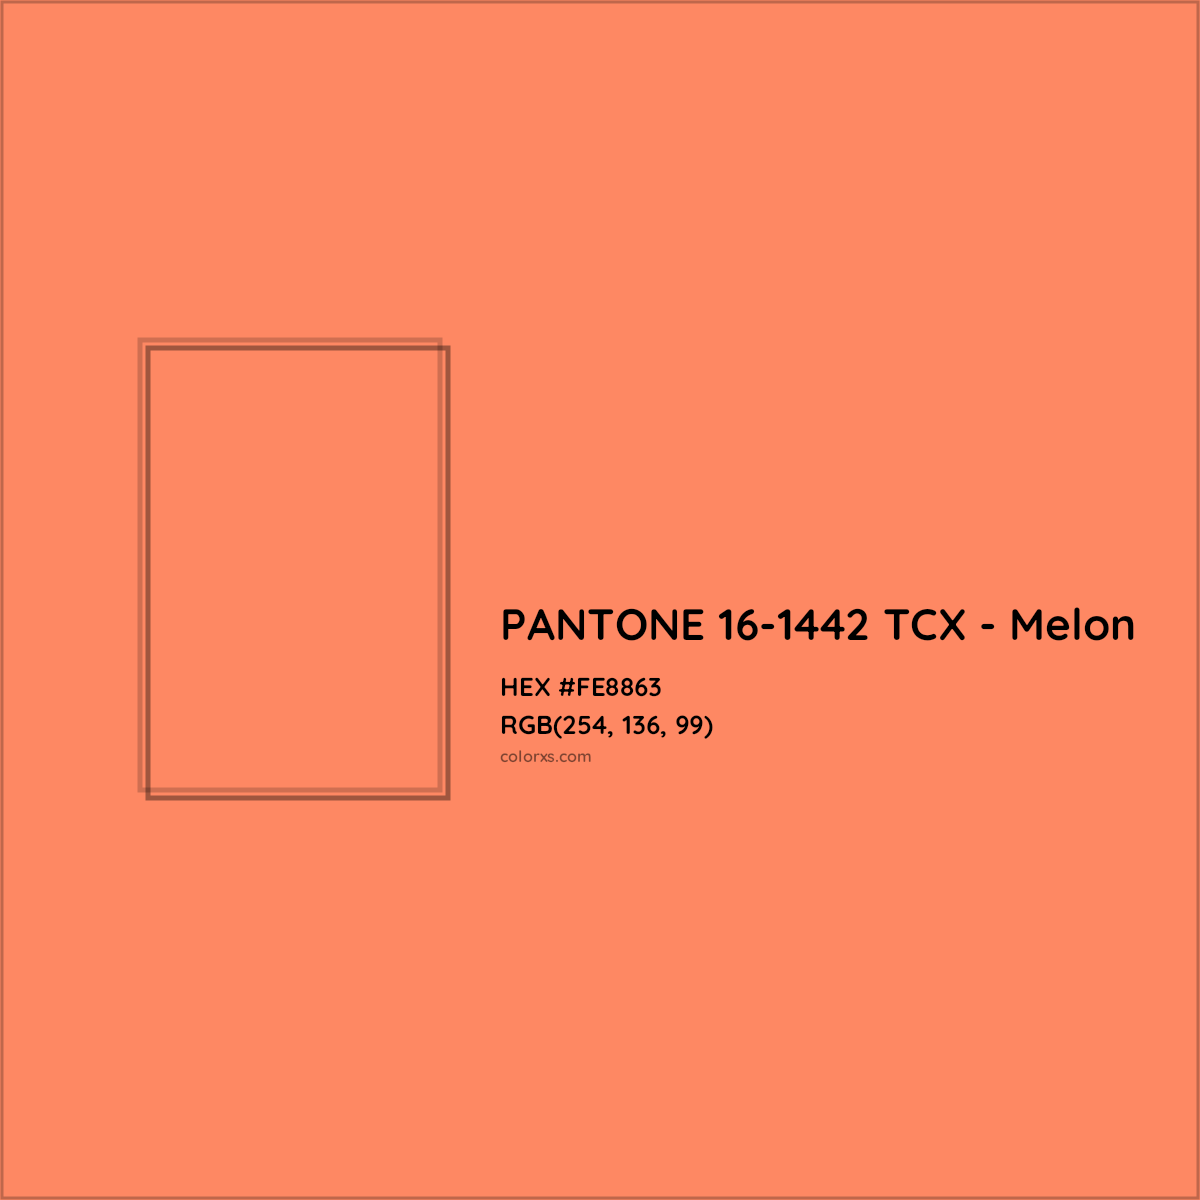 HEX #FE8863 PANTONE 16-1442 TCX - Melon CMS Pantone TCX - Color Code